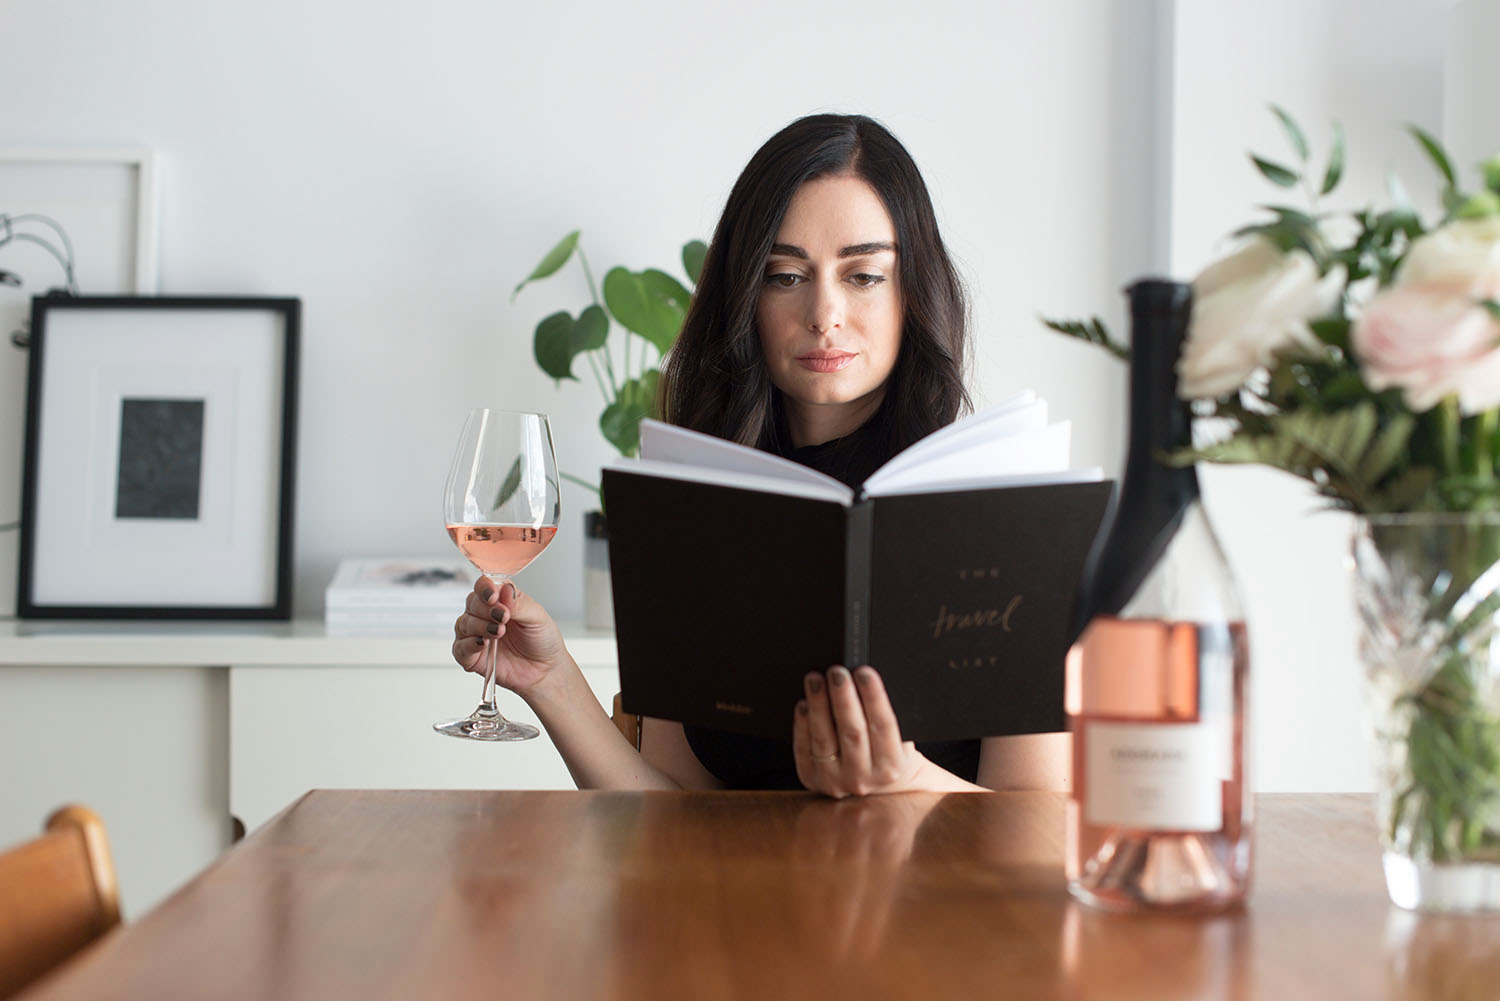 Top Winnipeg fashion blogger Cee Fardoe of Coco & Vera reads while drinking Adorada rose wine in her dining room